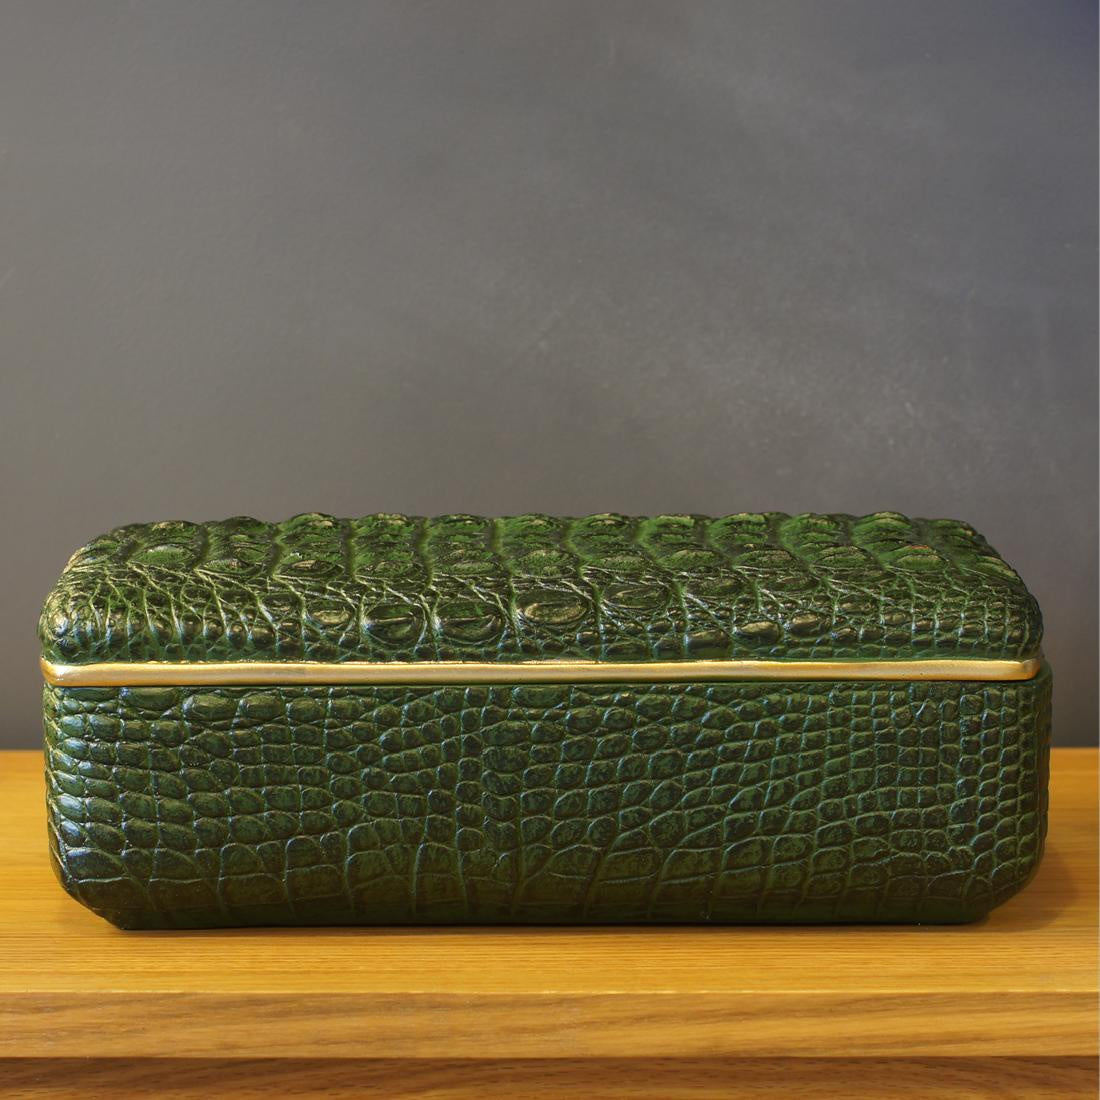 Green faux crocodile skin leather box